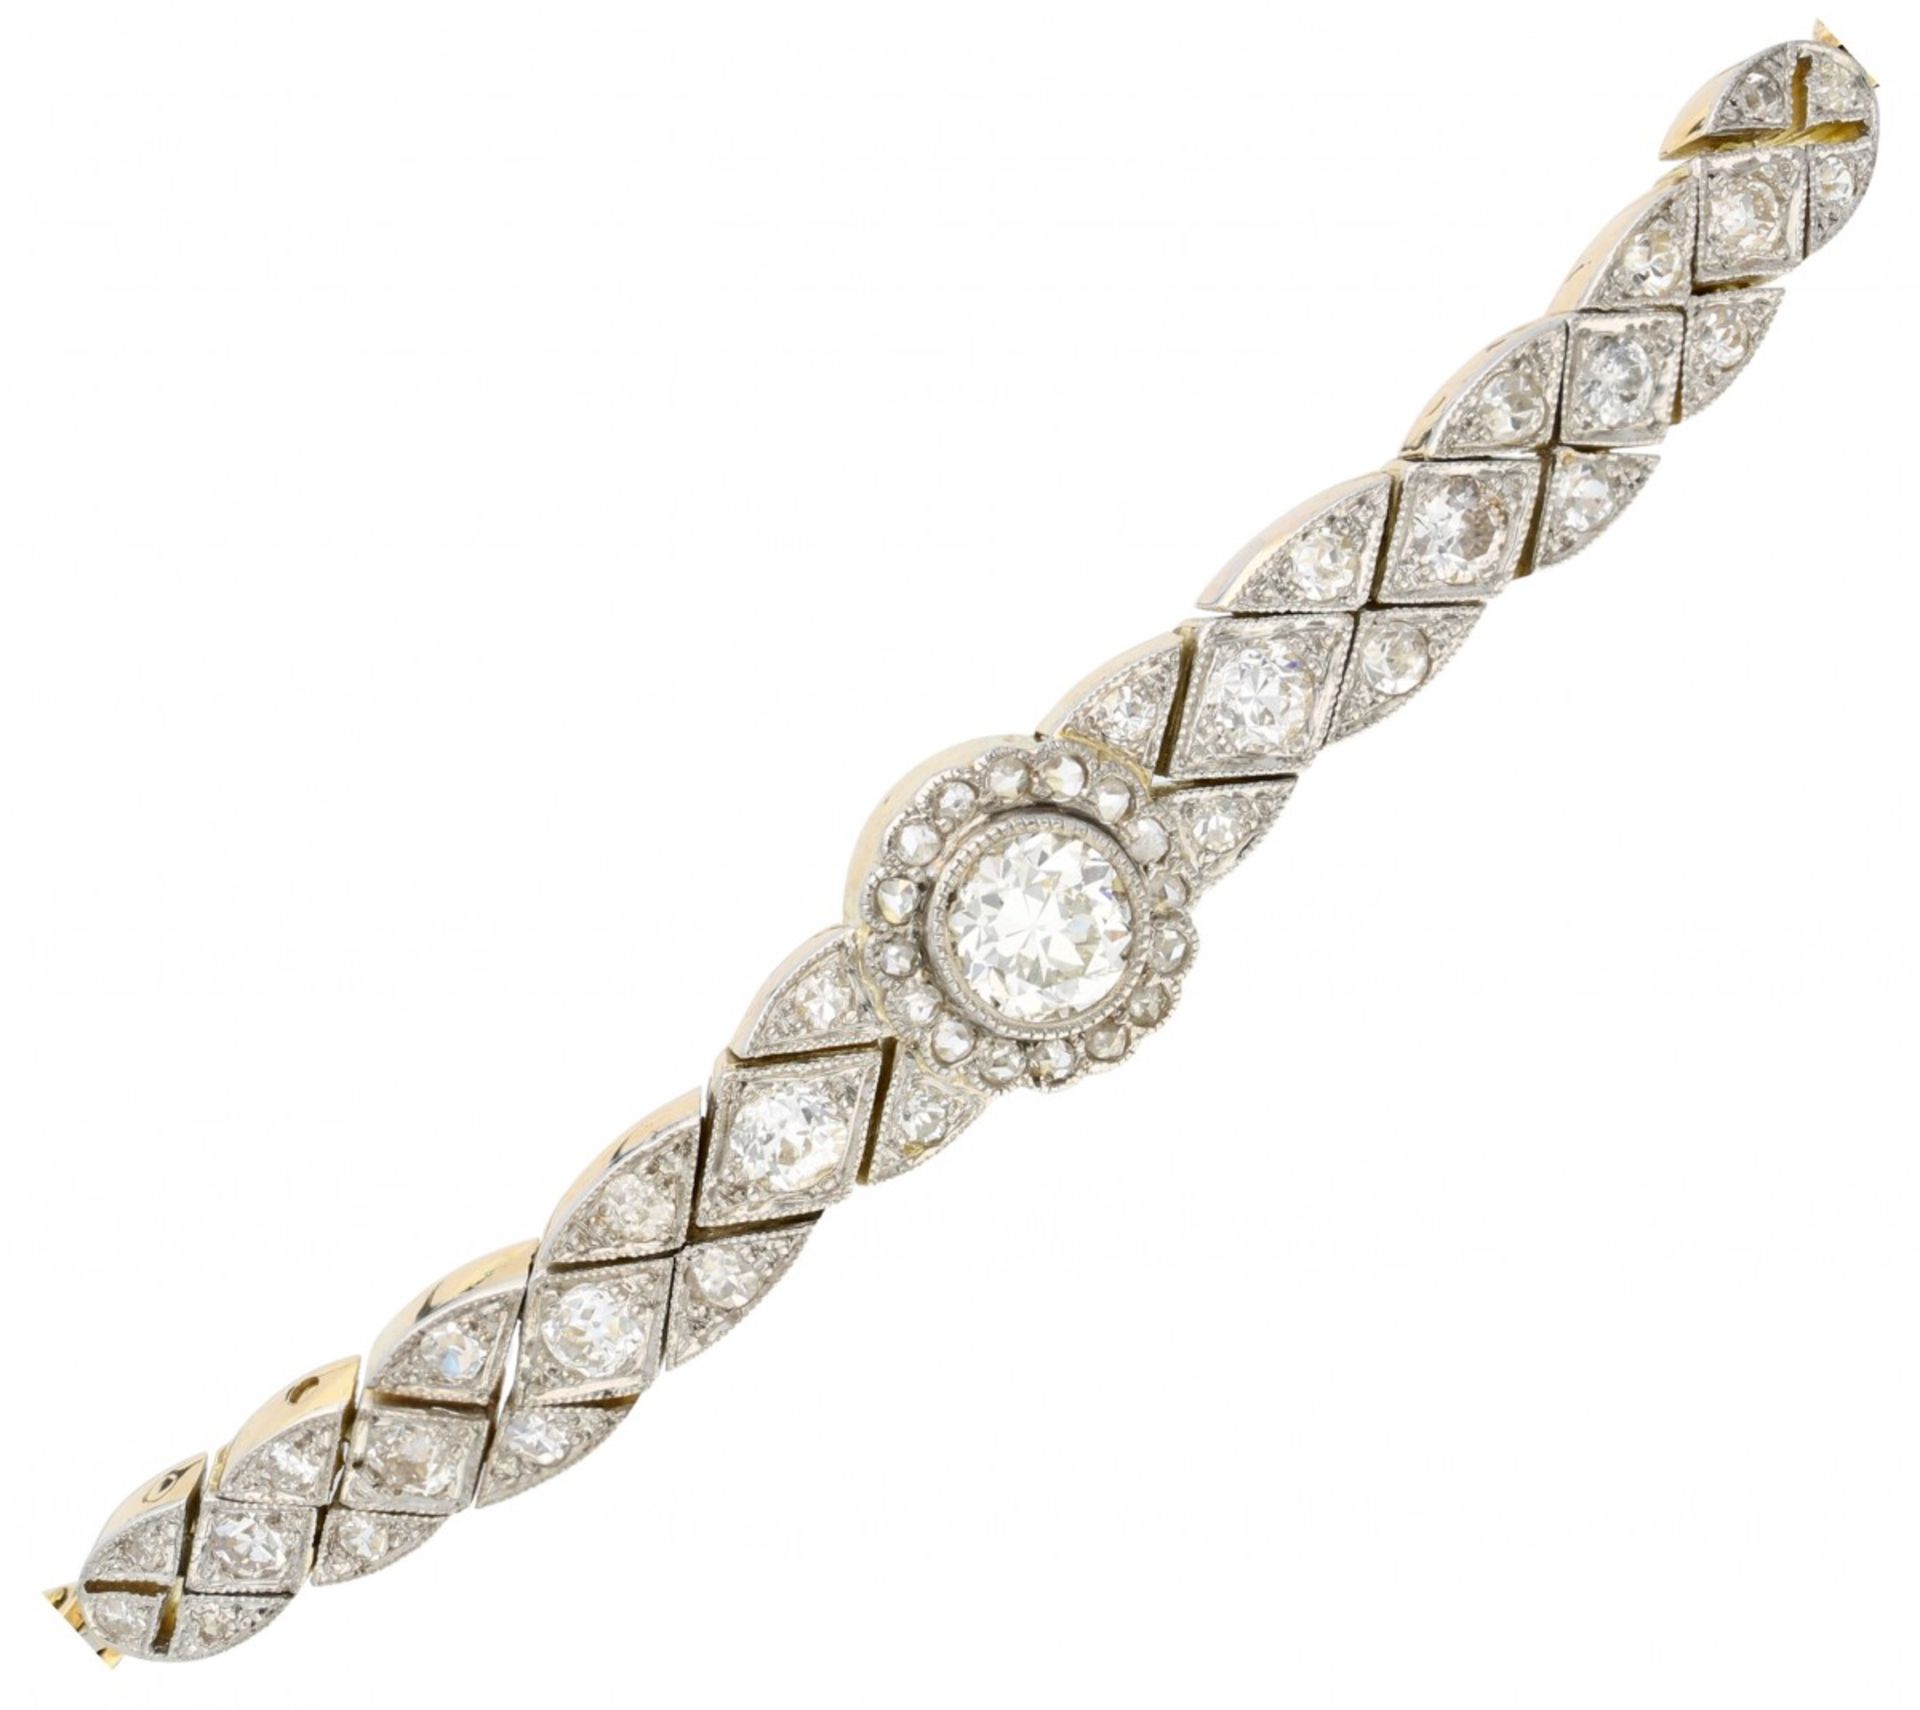 Bicolor gold Art Deco bracelet set with approx. 0.88 ct. diamond - 18 ct. - Image 2 of 3